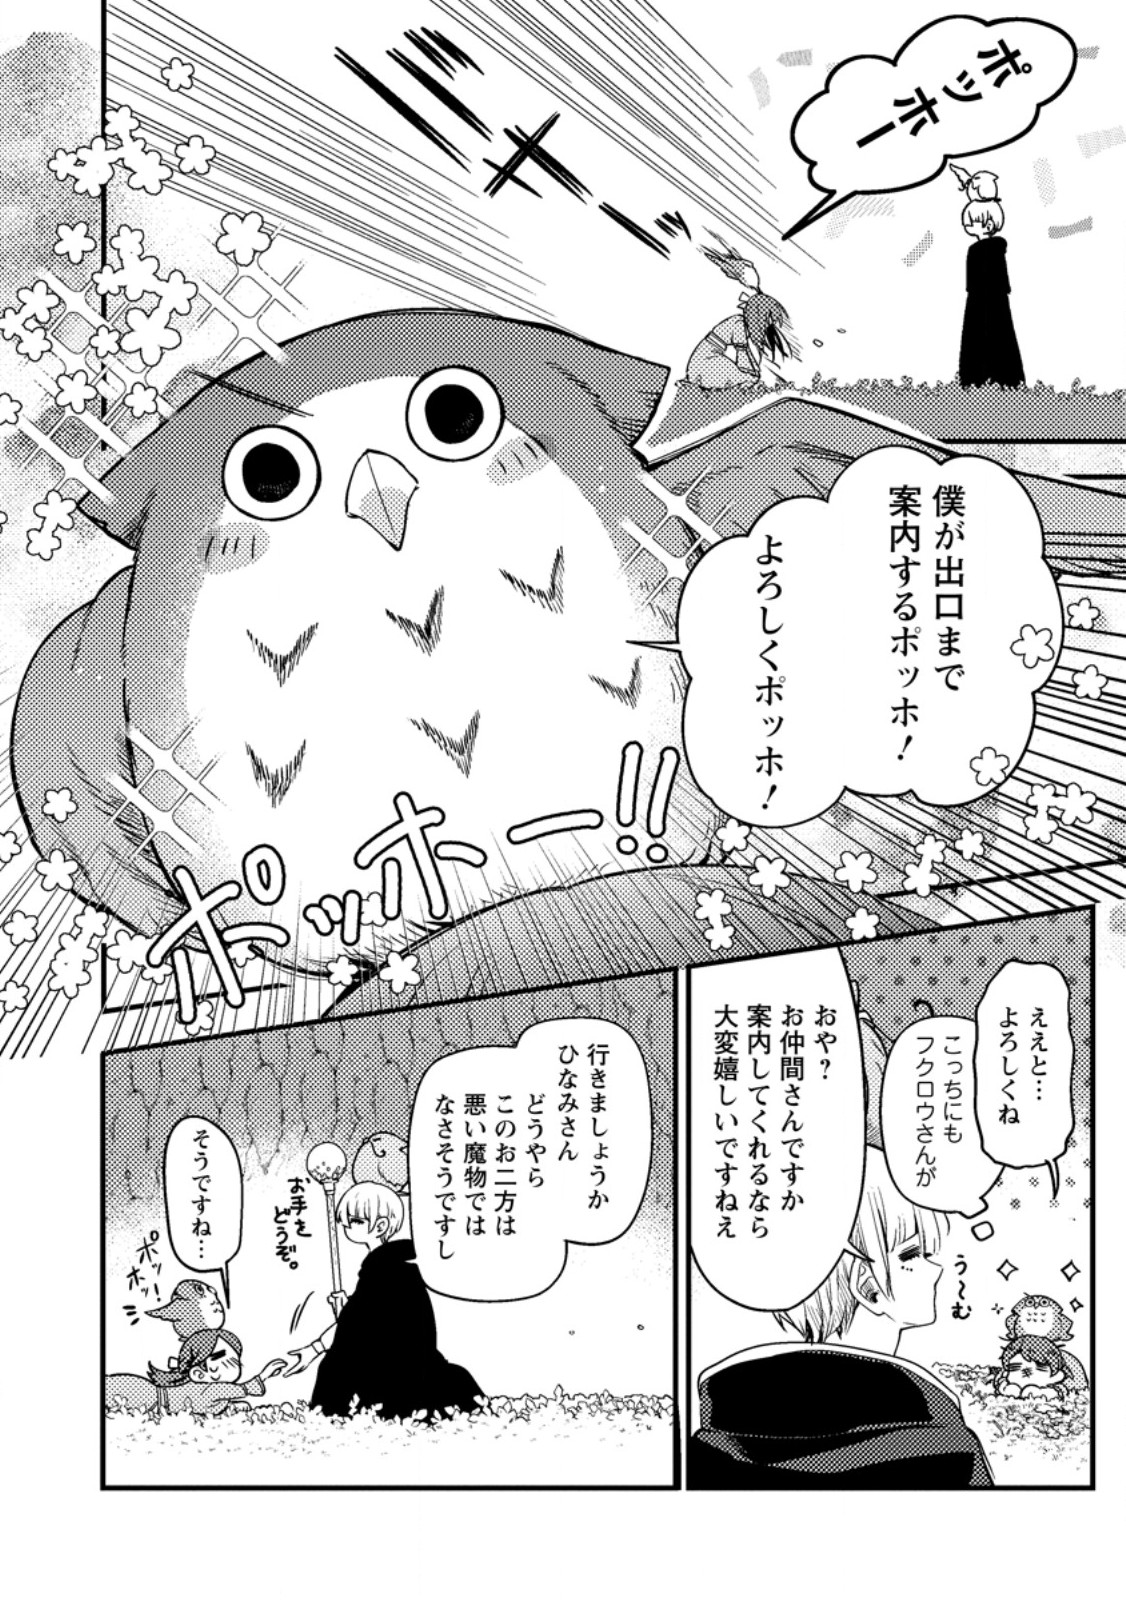 Hakoniwa no Yakujutsushi - Chapter 36.1 - Page 10